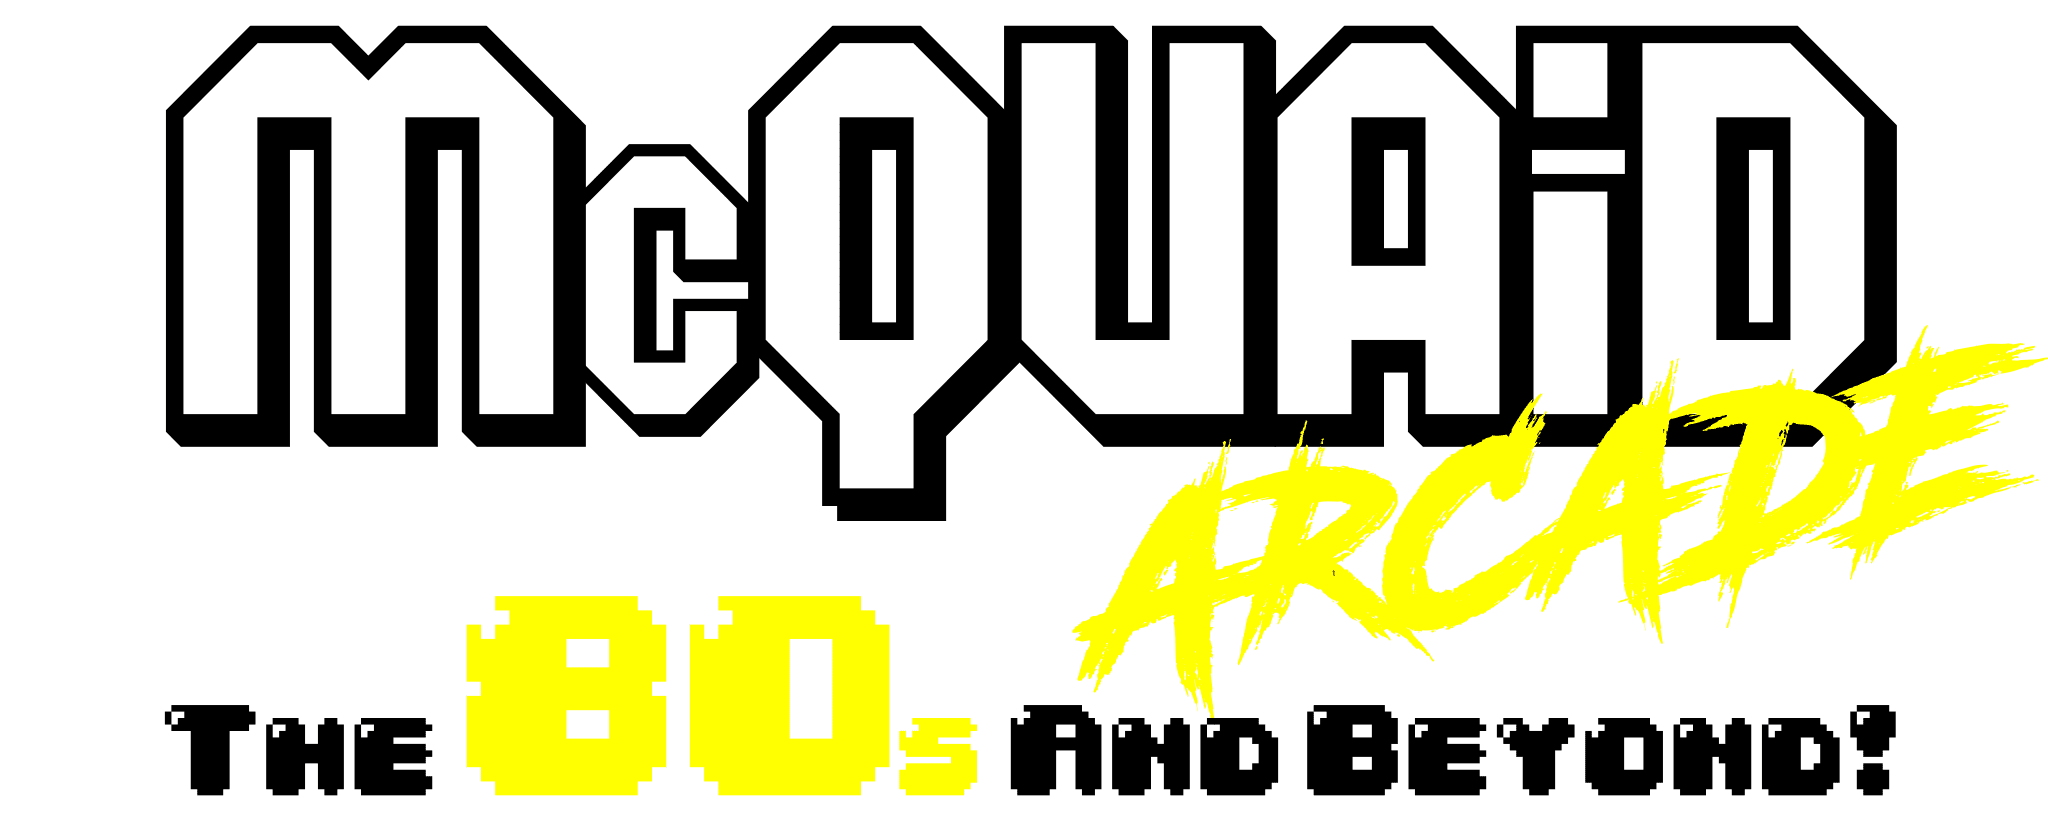 McQuaid Arcade Podcast